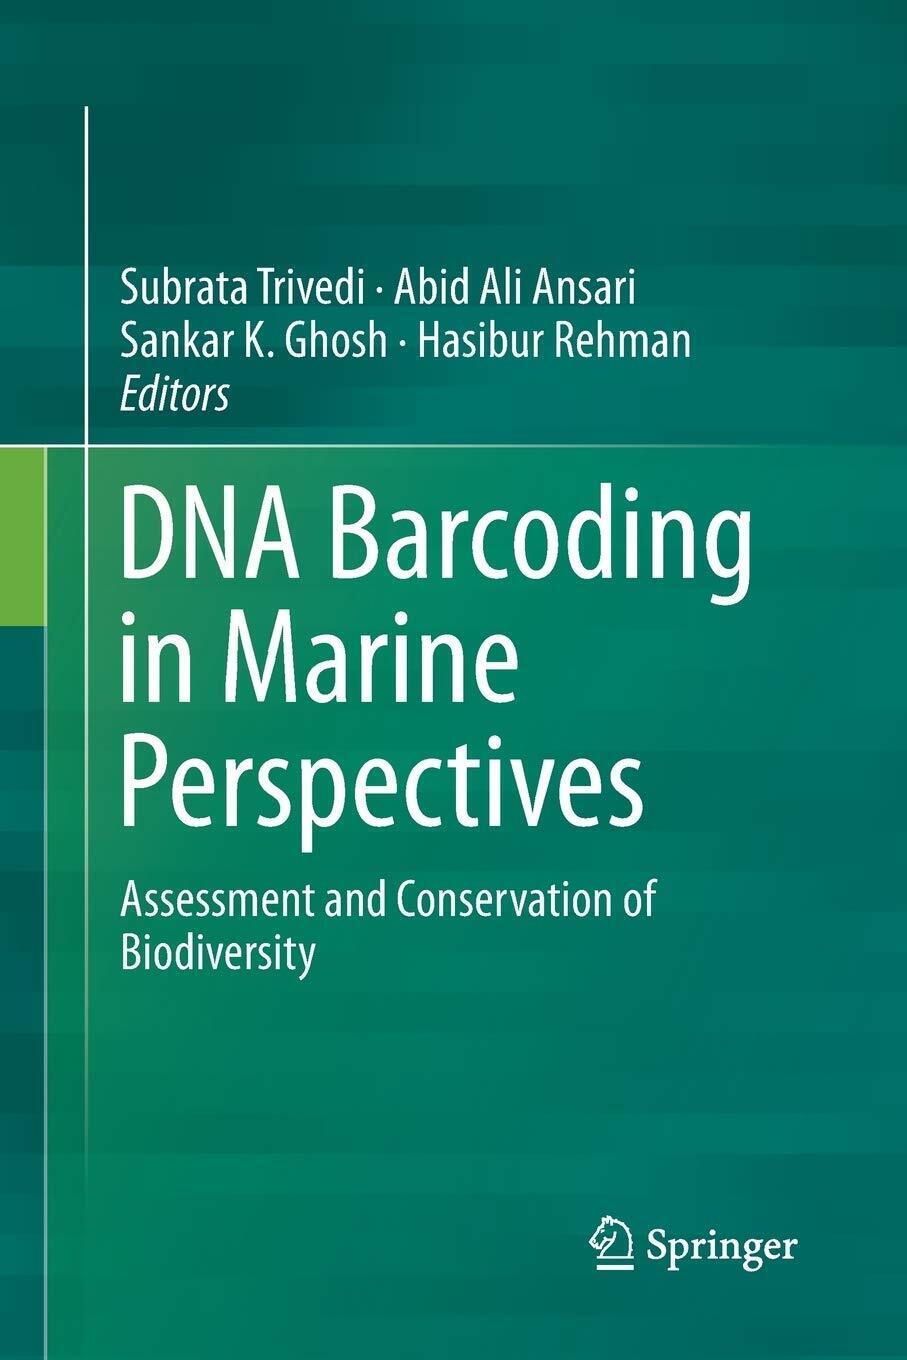 DNA Barcoding in Marine Perspectives - Subrata Trivedi - Springer, 2018